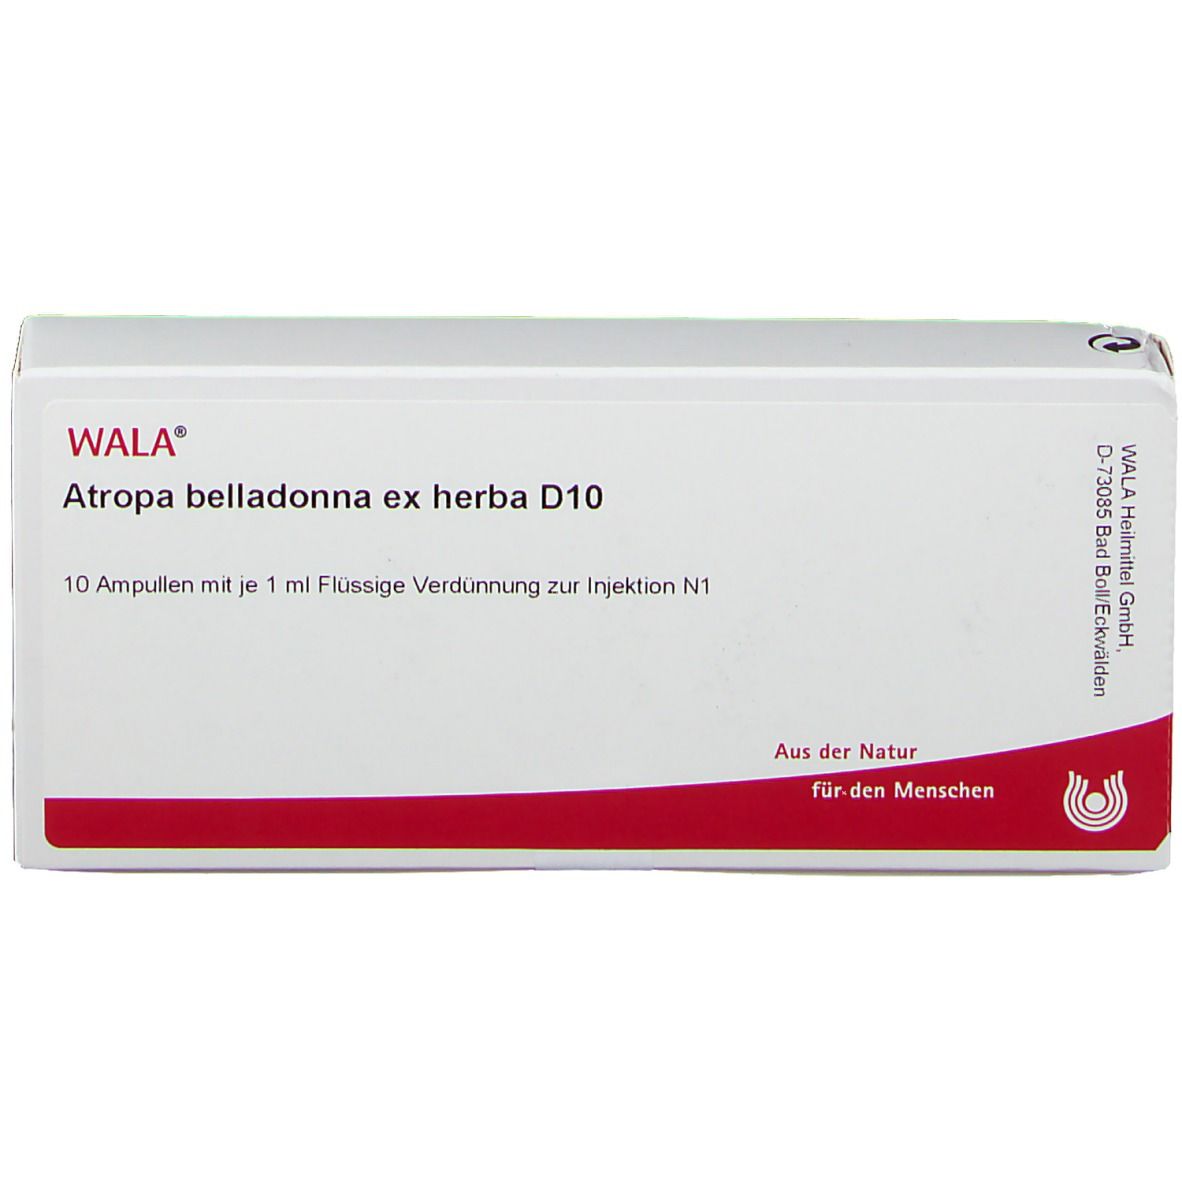 WALA® Atropa belladonna ex herba D 10